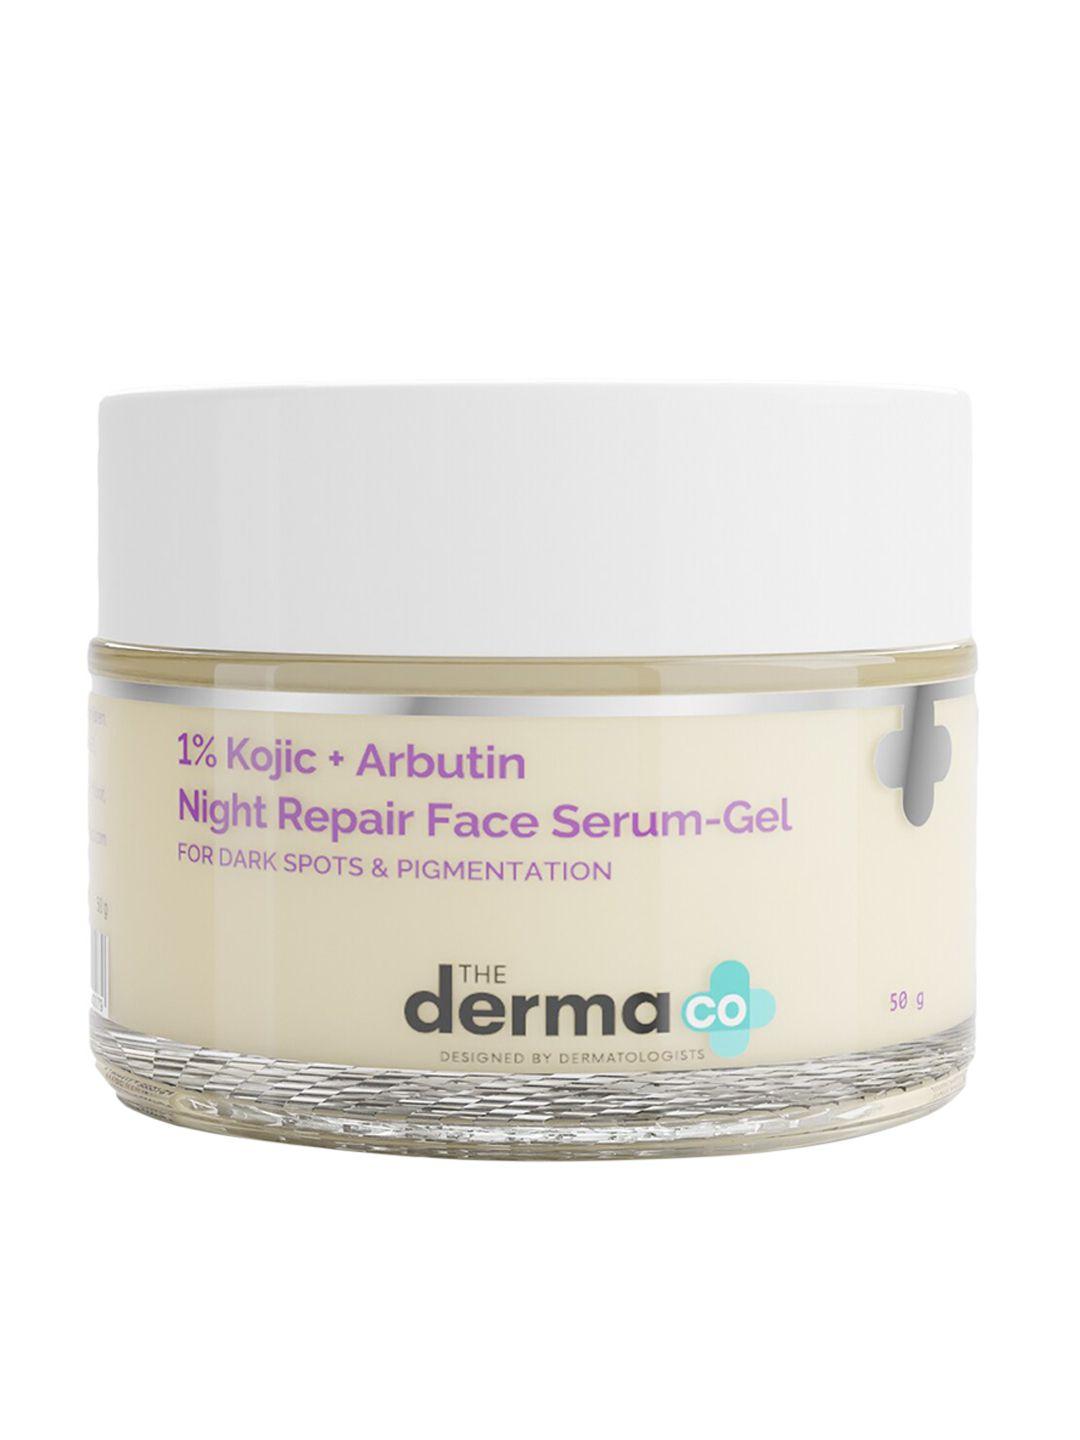 the derma co. 1% kojic + arbutin night repair face serum - gel for dark spots - 50 g